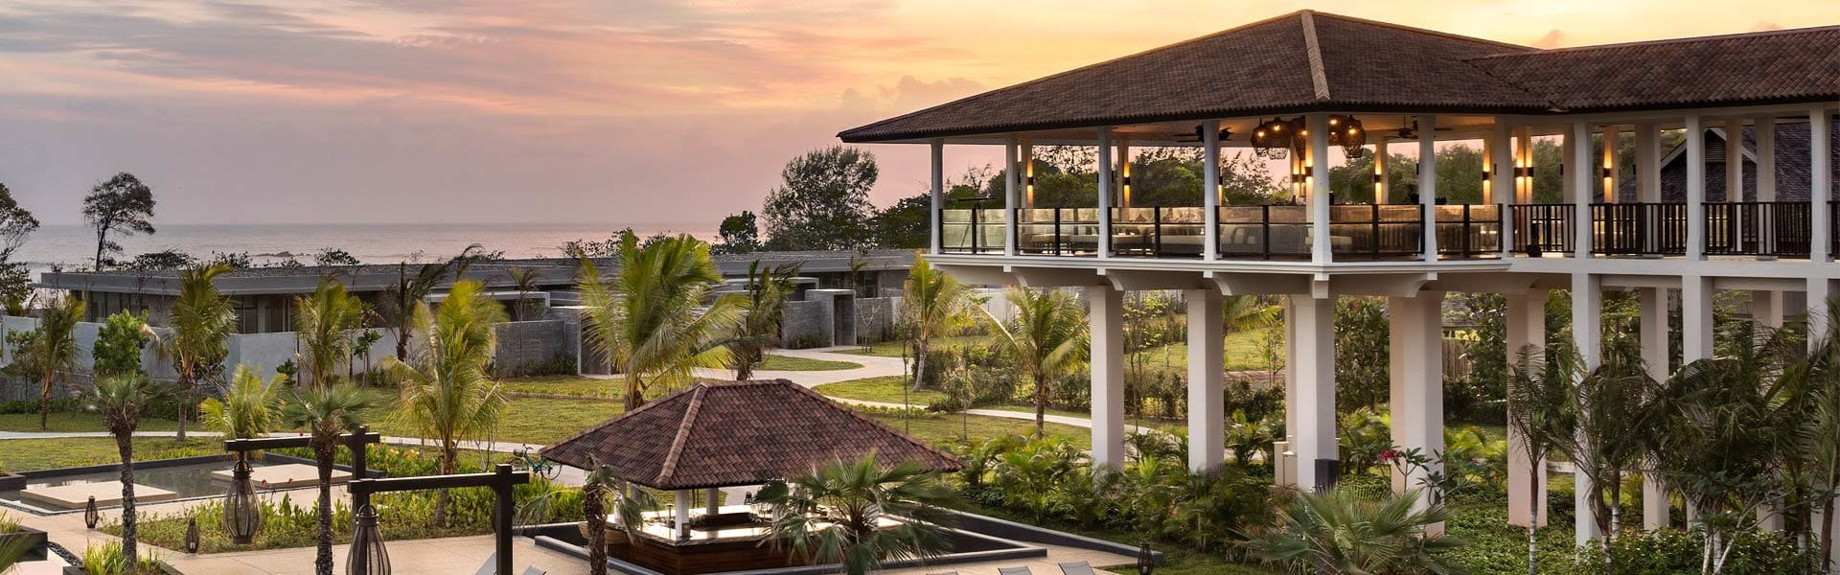 Anantara Desaru Coast Resort & Villas – Johor, Malaysia – Observatory Bar View